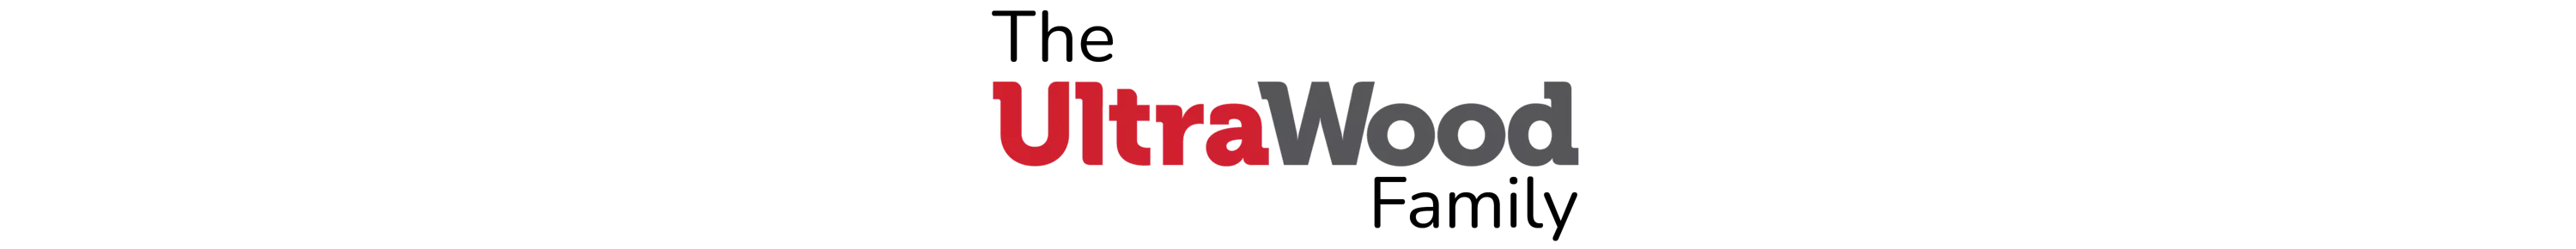 ultrawood family logo